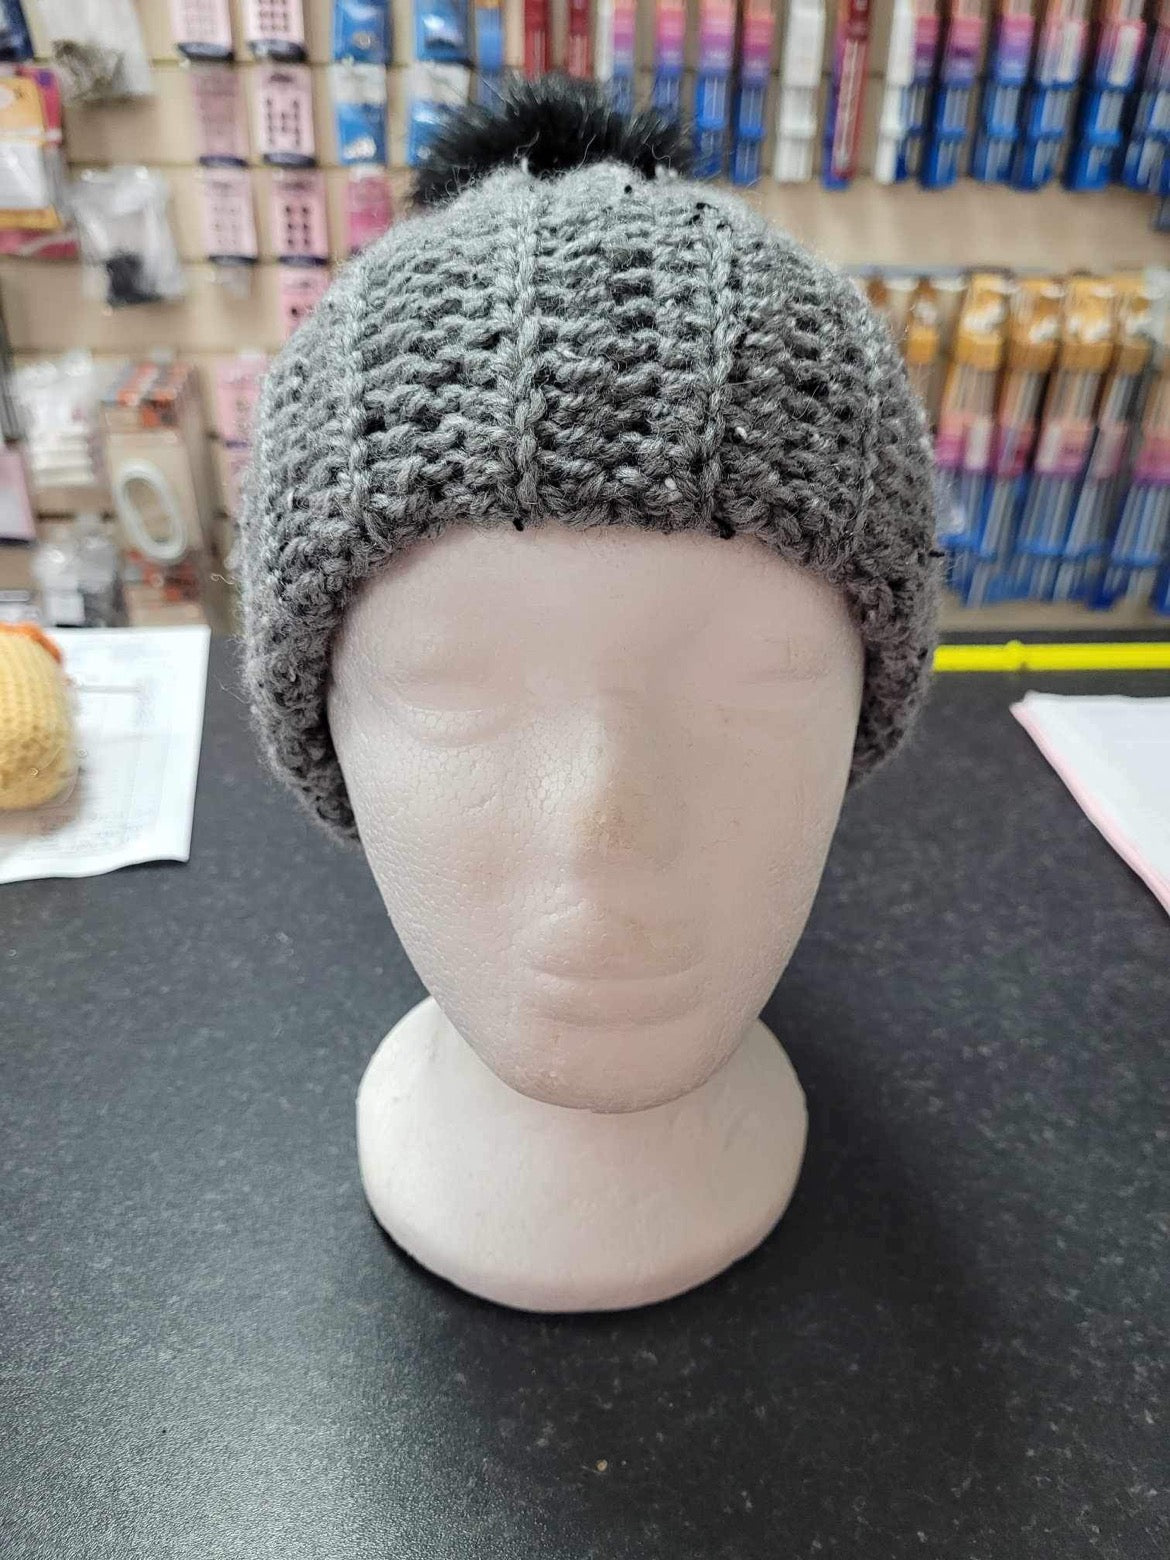 Handmade Crochet Hats